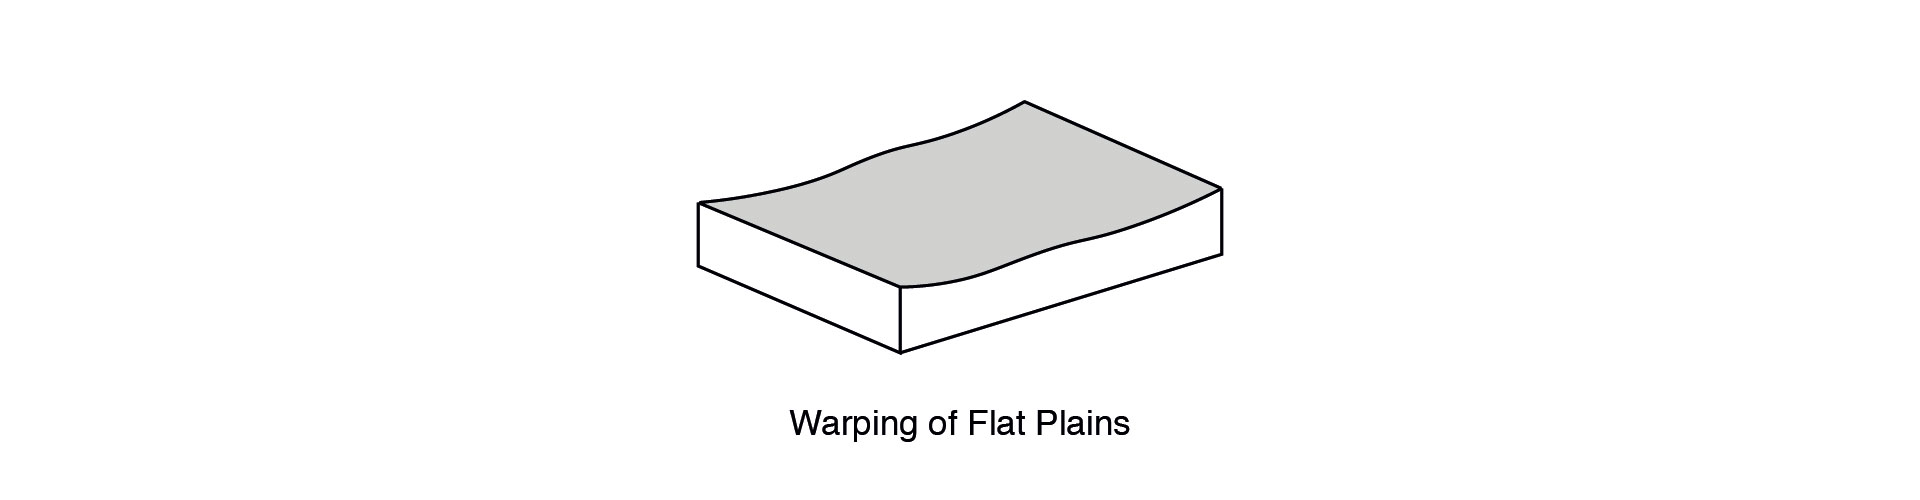 avoiding large flat plains in sls designs